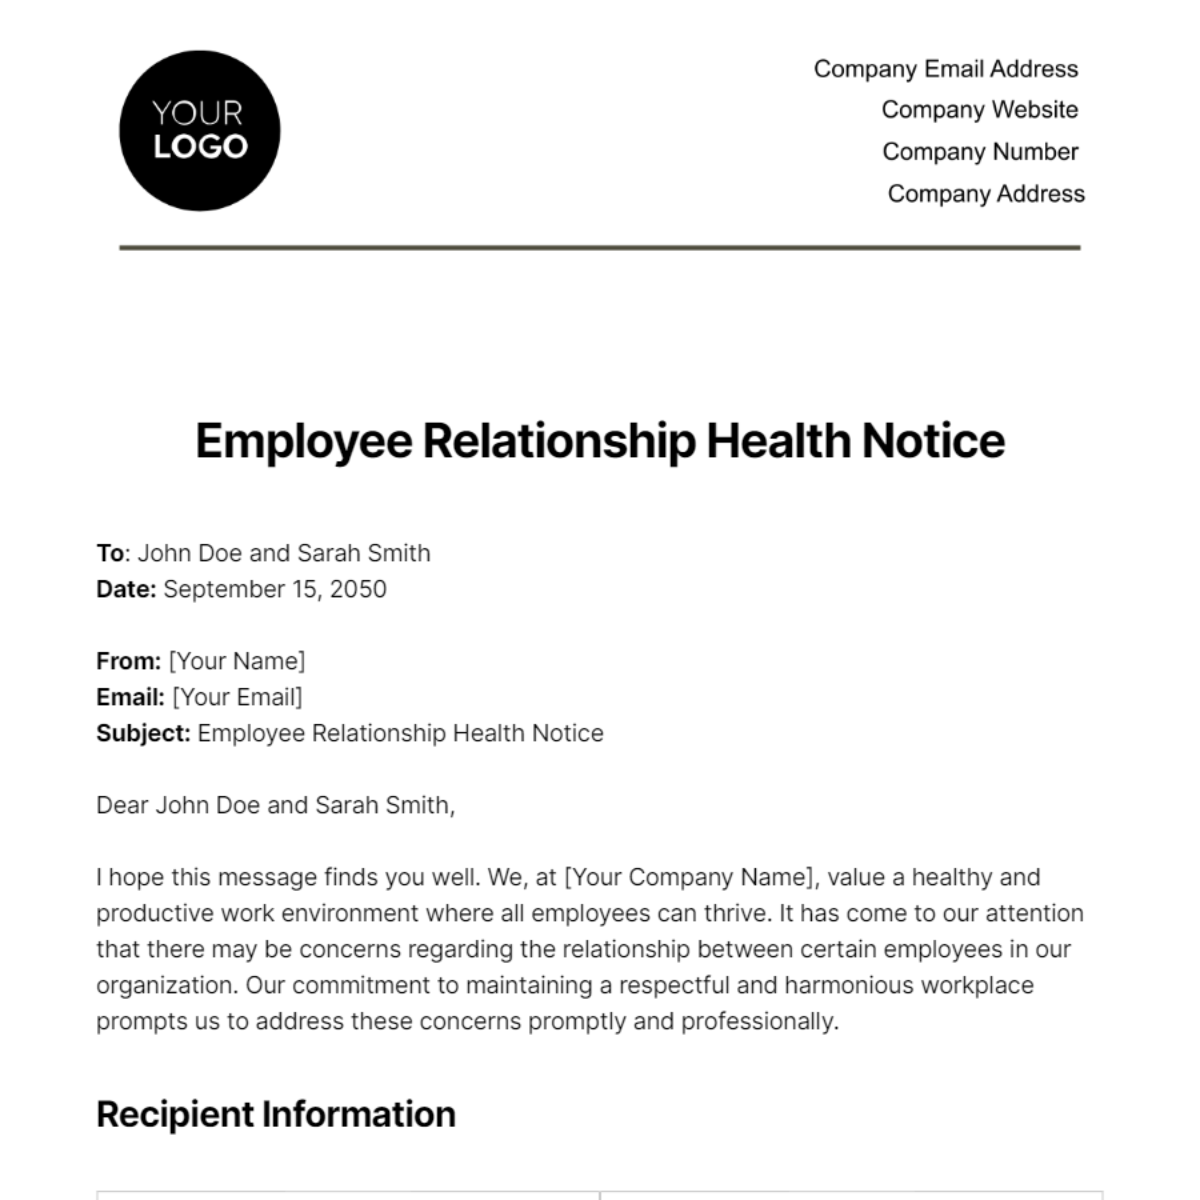 Employee Relationship Health Notice HR Template